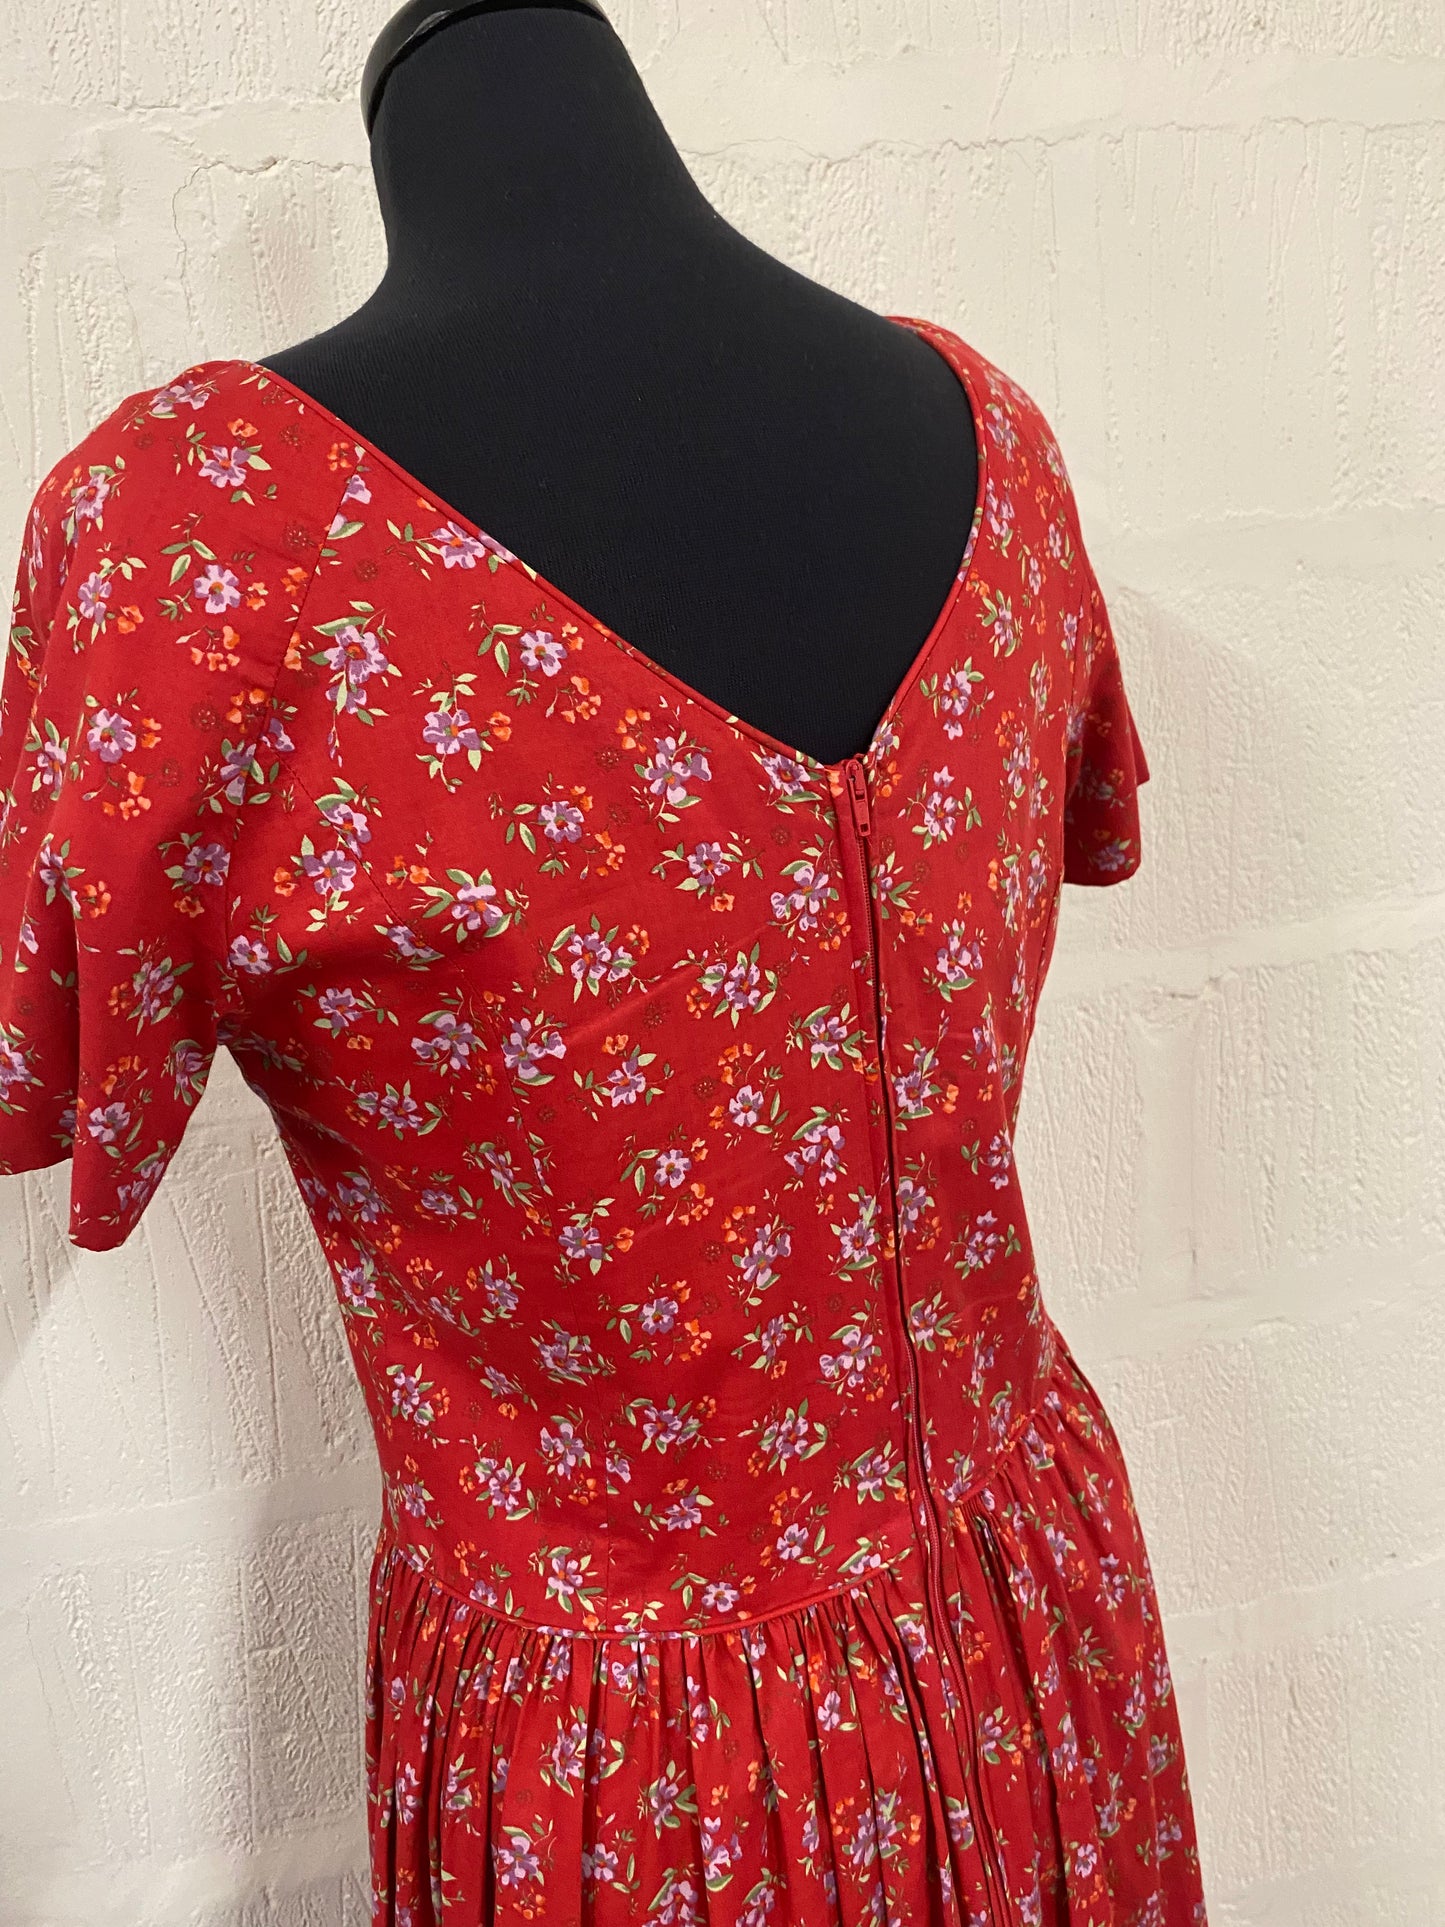 Vintage Red Floral Laura Ashley Dress Size 12